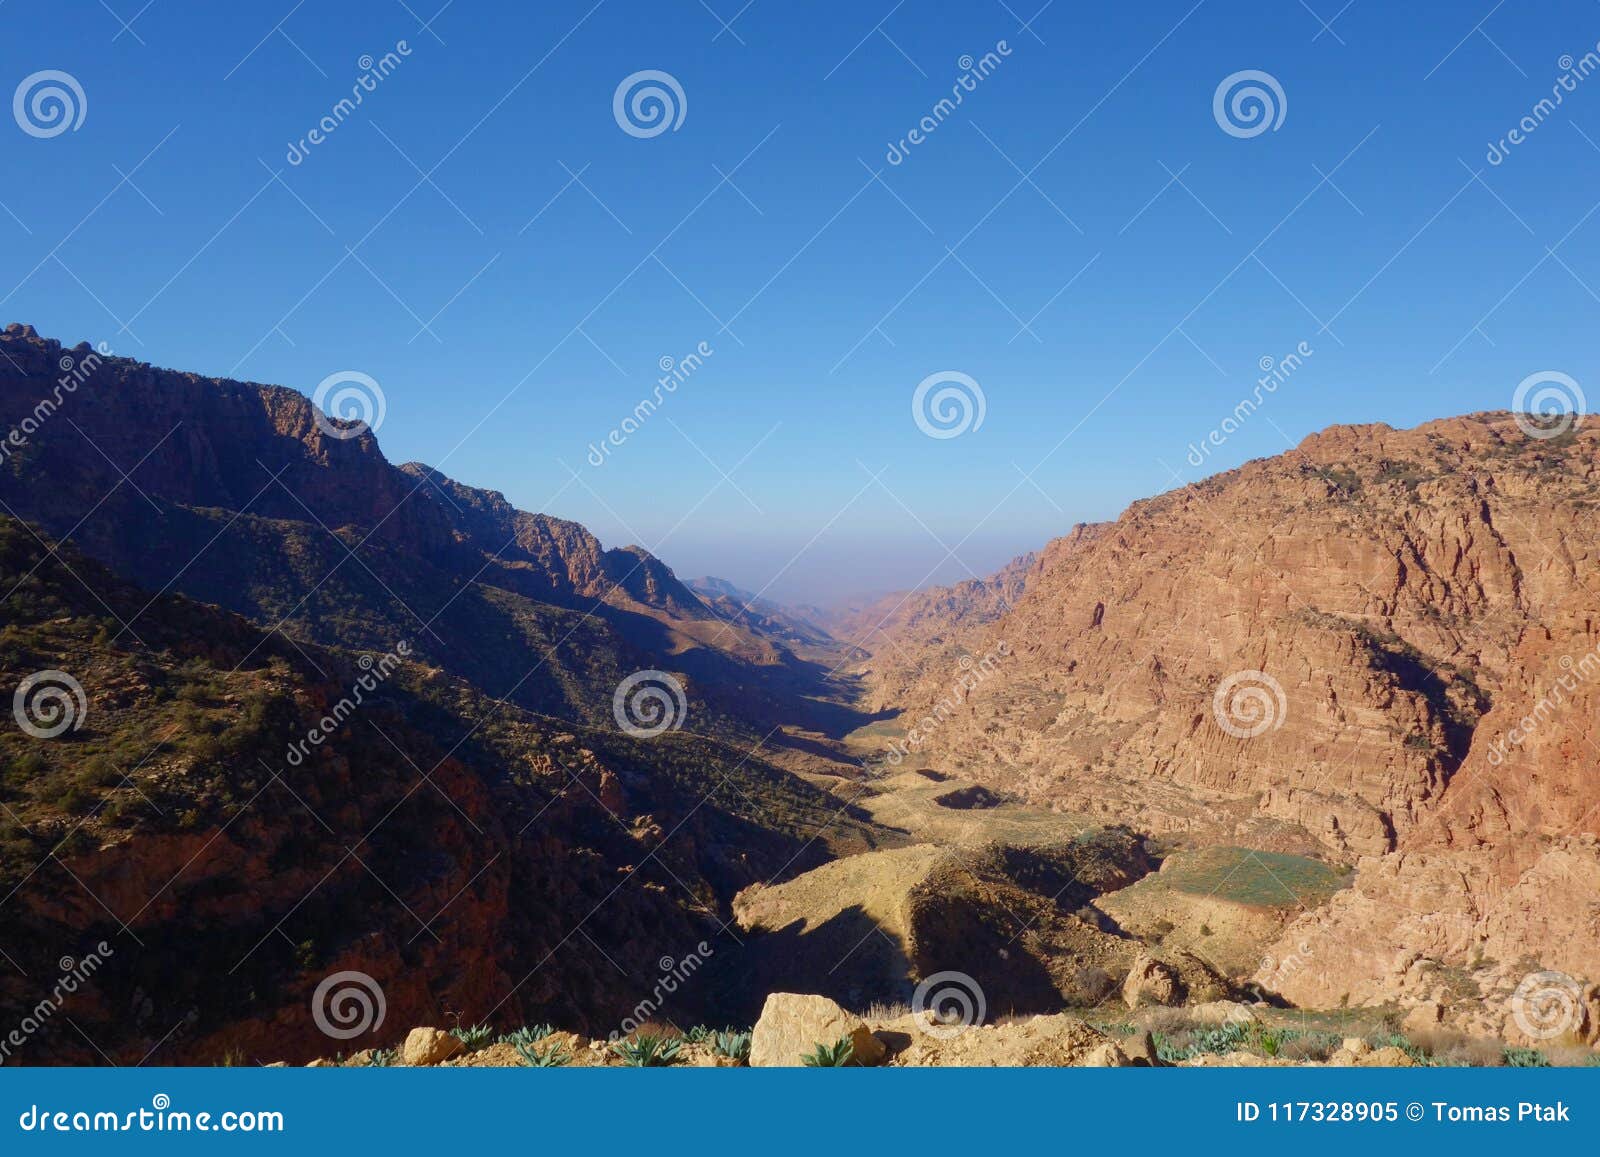 canyon of dana biosphere nature reserve landscape from dana historical village, jordan, middle east